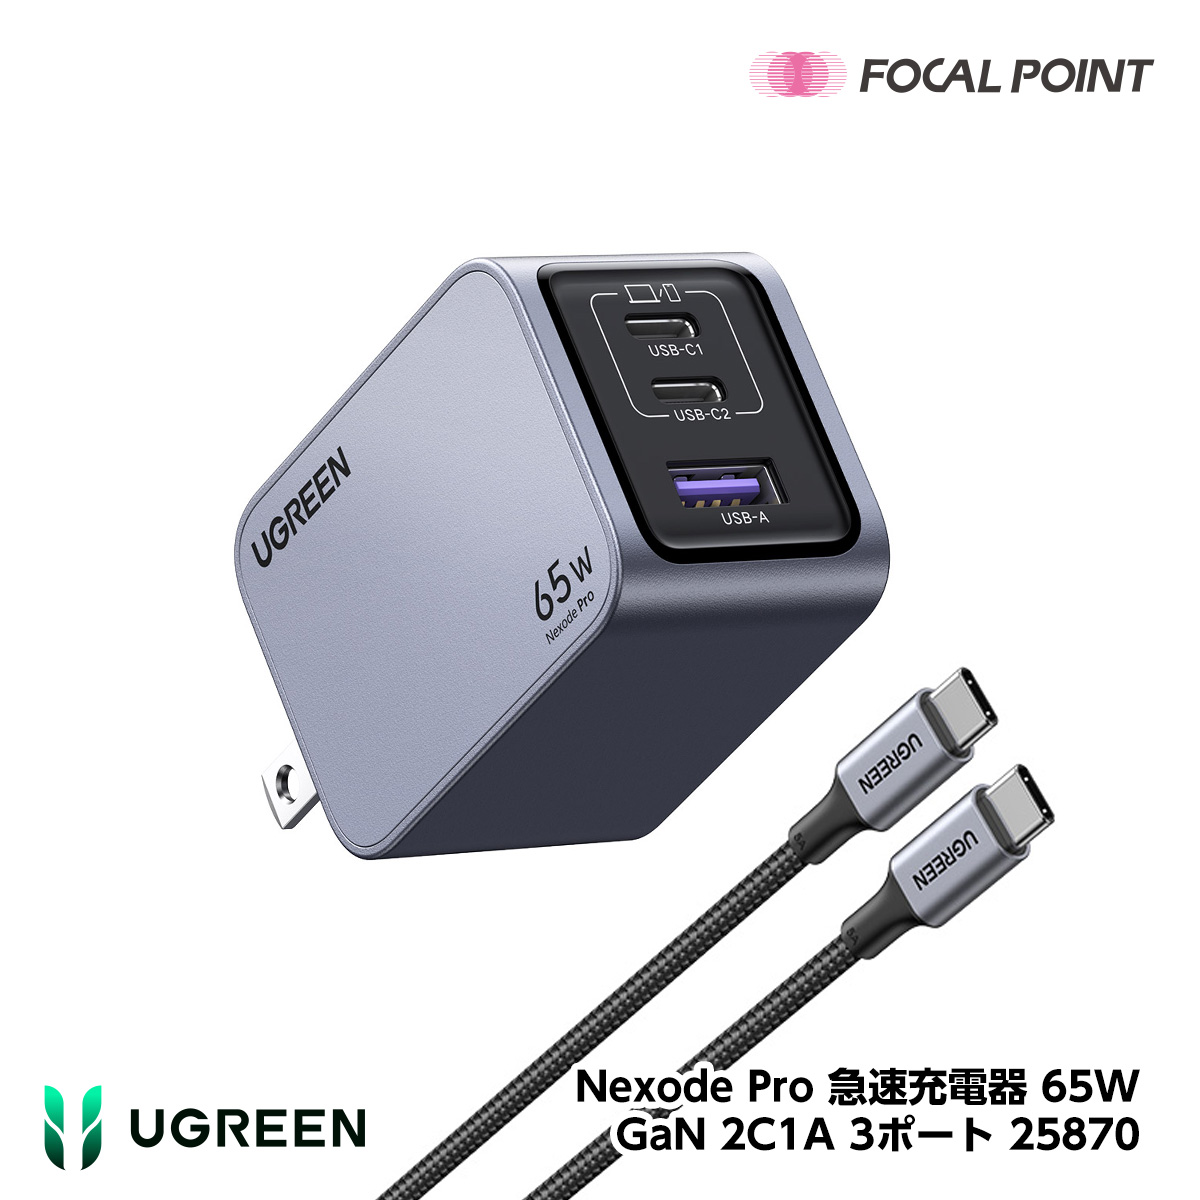 UGREEN Nexode Pro 急速充電器 65W GaN 2C1A 3ポート 25870の商品画像